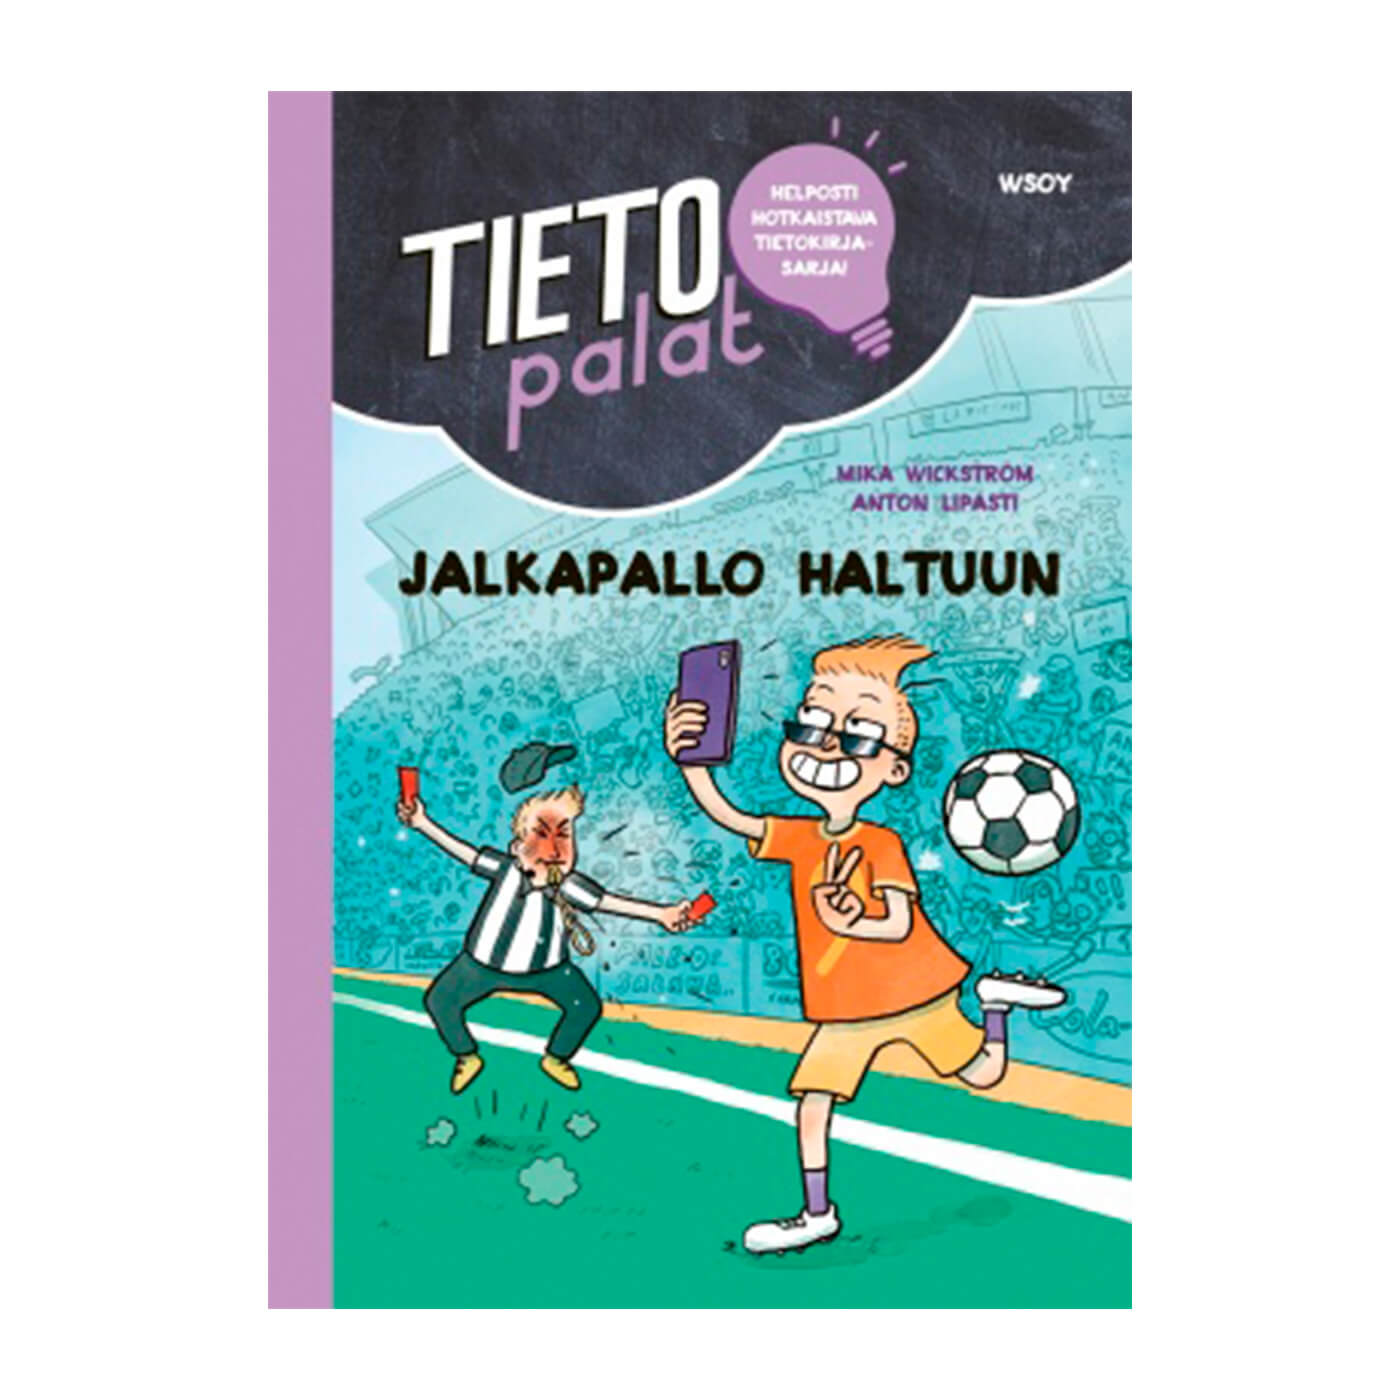 Tietopalat: Football take control book